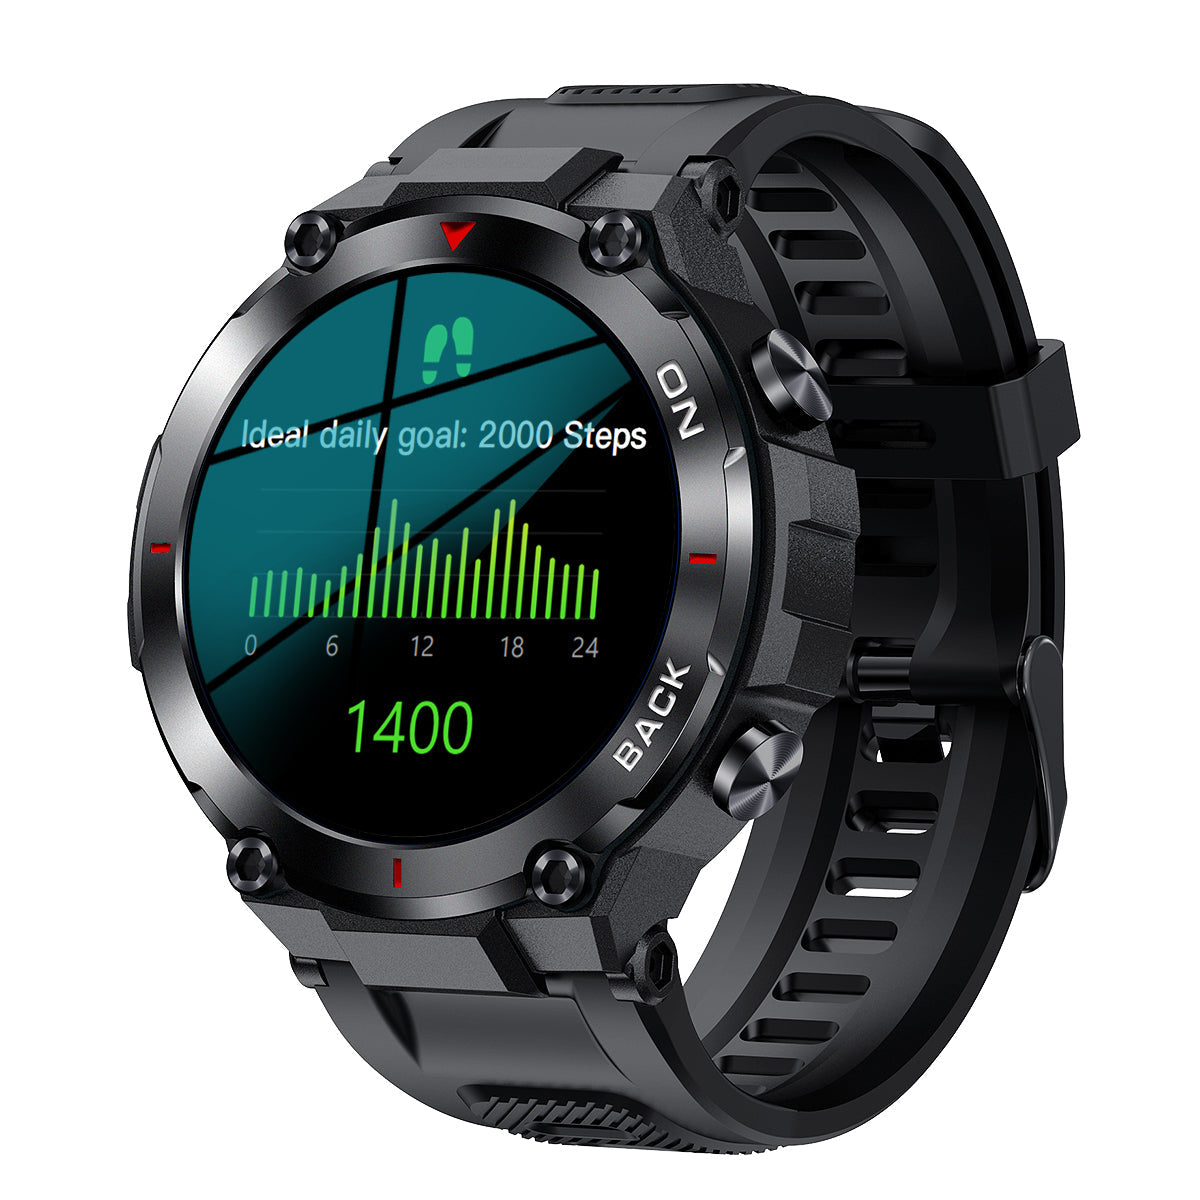 FutureWrist™ Falcon Elite Sports Smartwatch